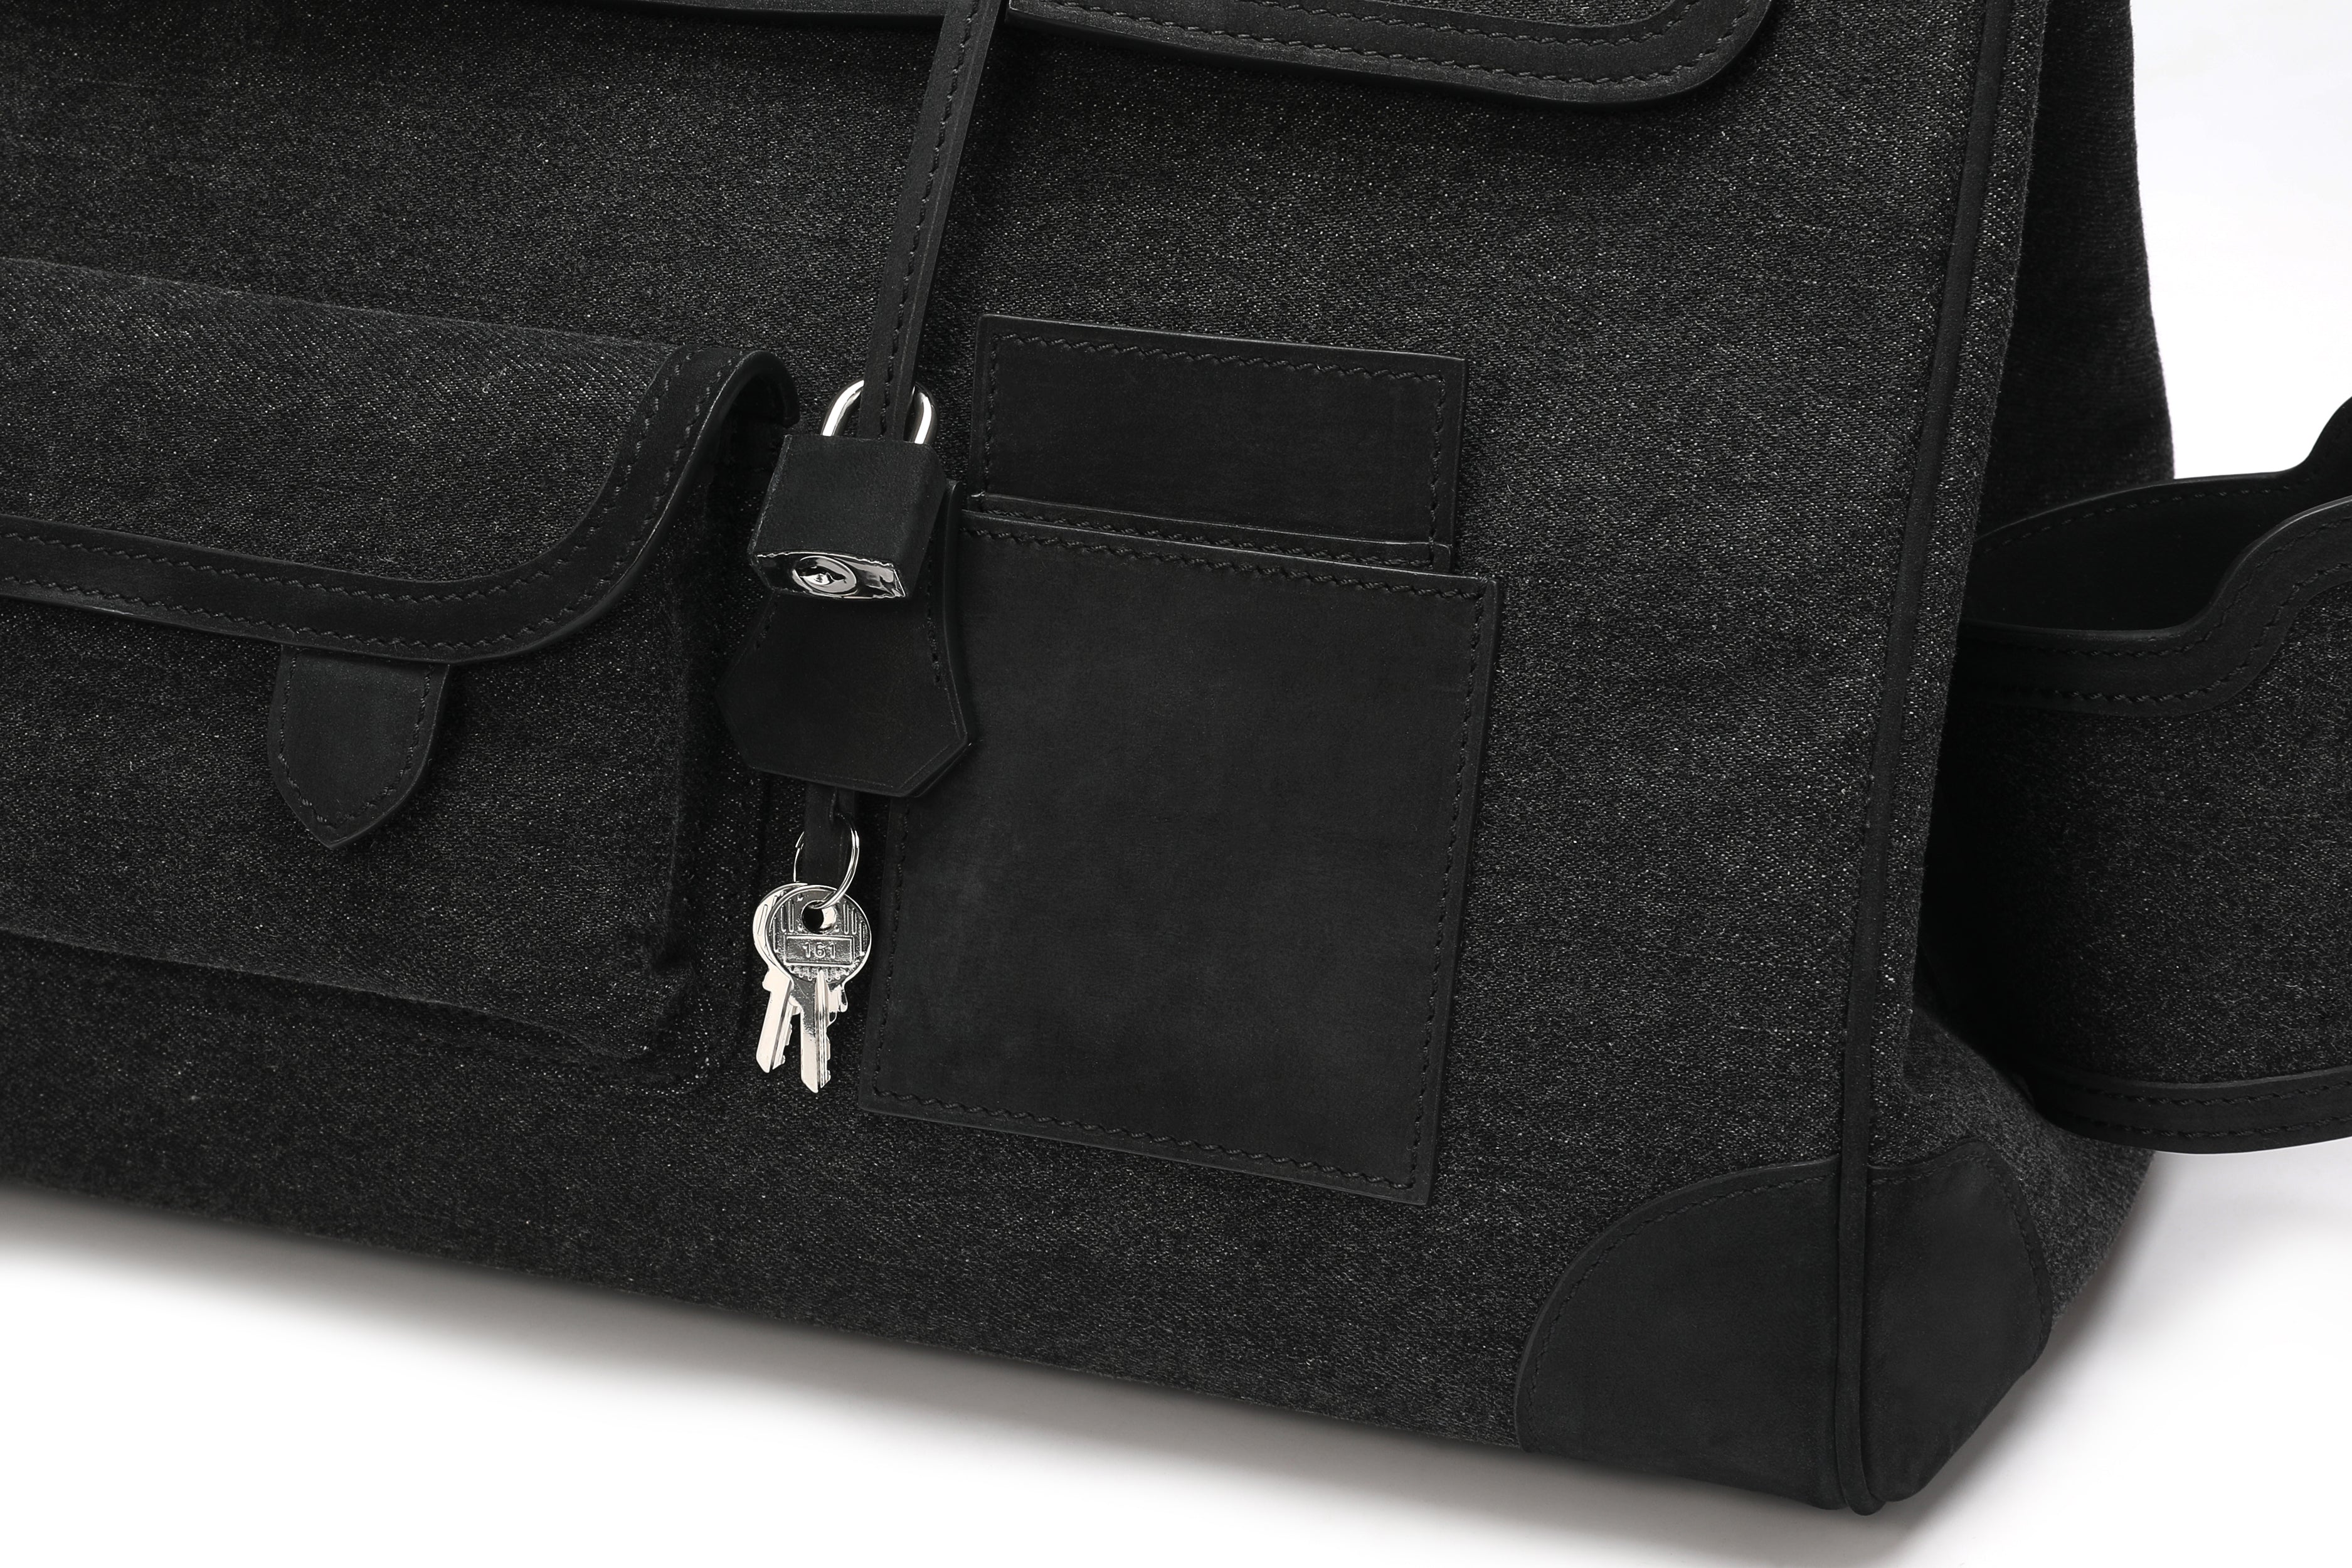 Travel Bag Cargo 40 Black/Black (Pre-Order)